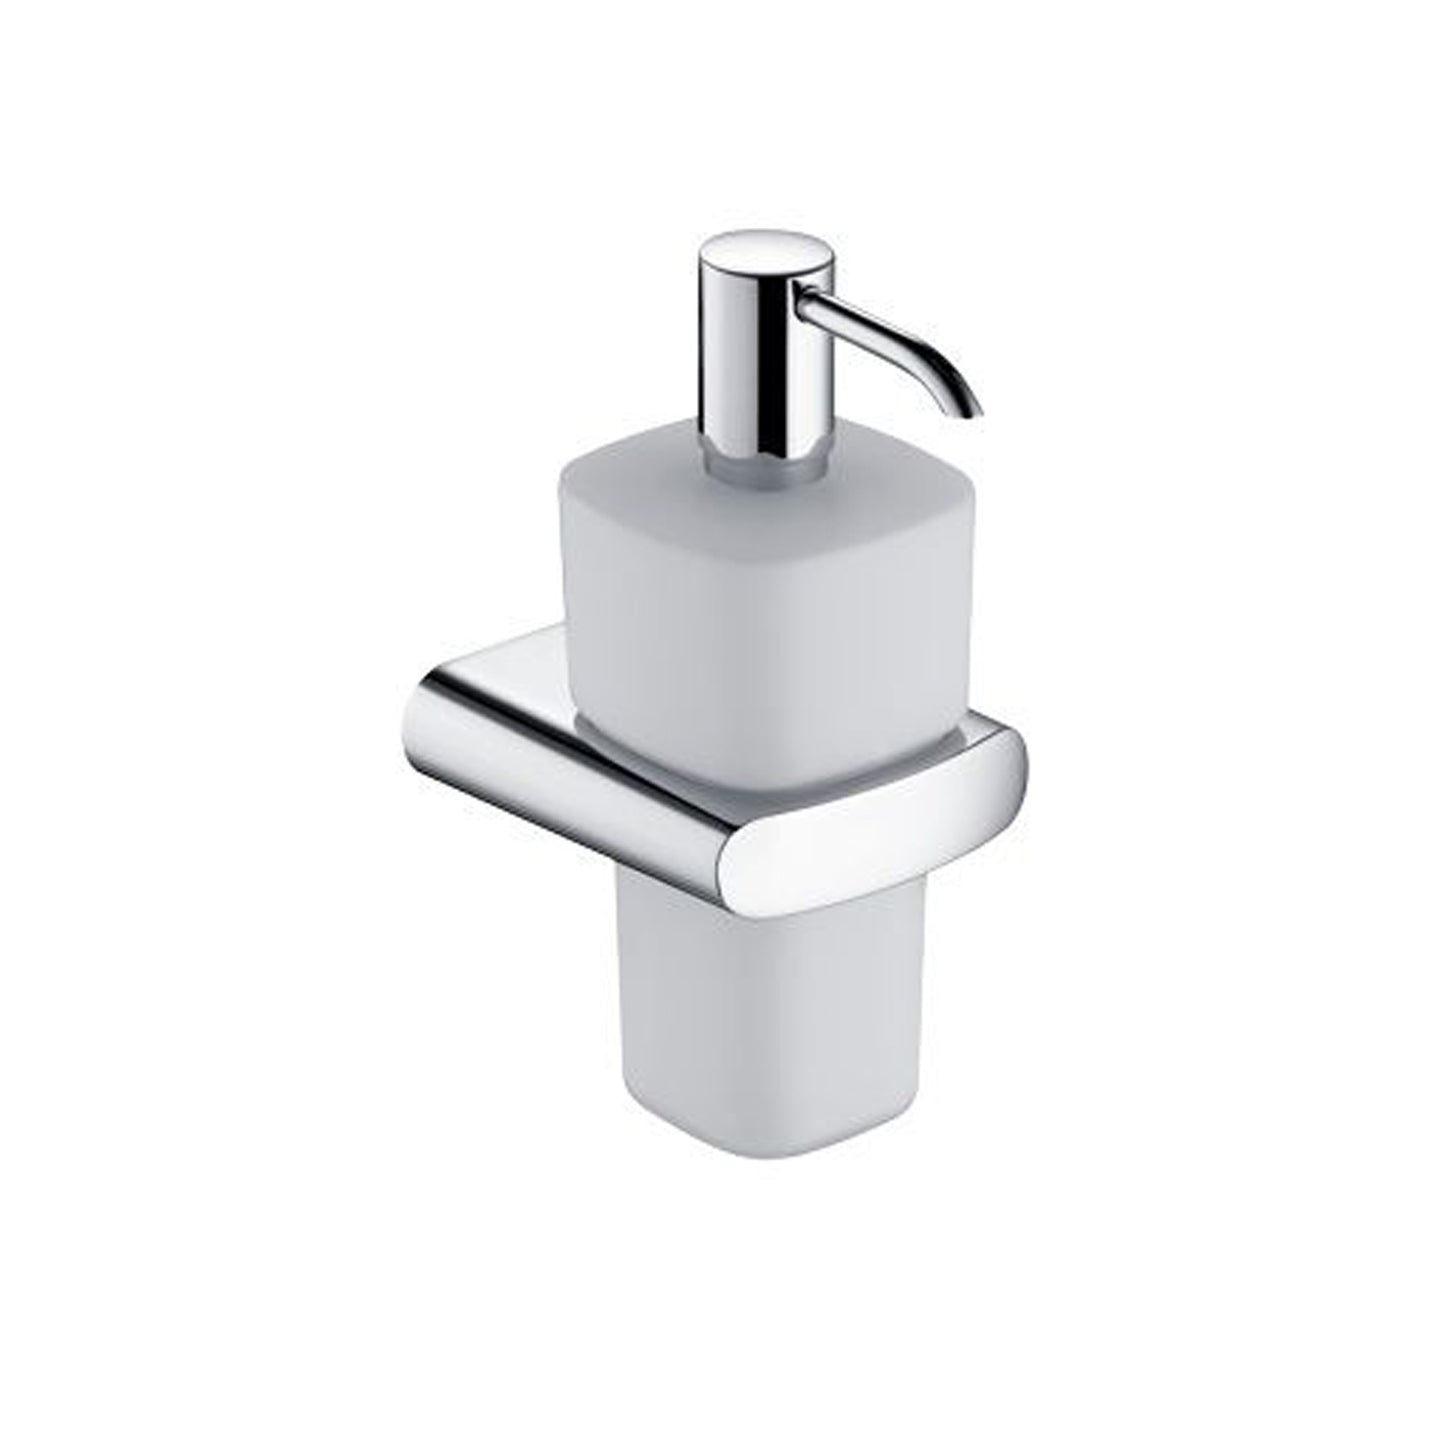 KEUCO ELEGANCE Lotion/soap dispenser with holder and pump 11654 019000